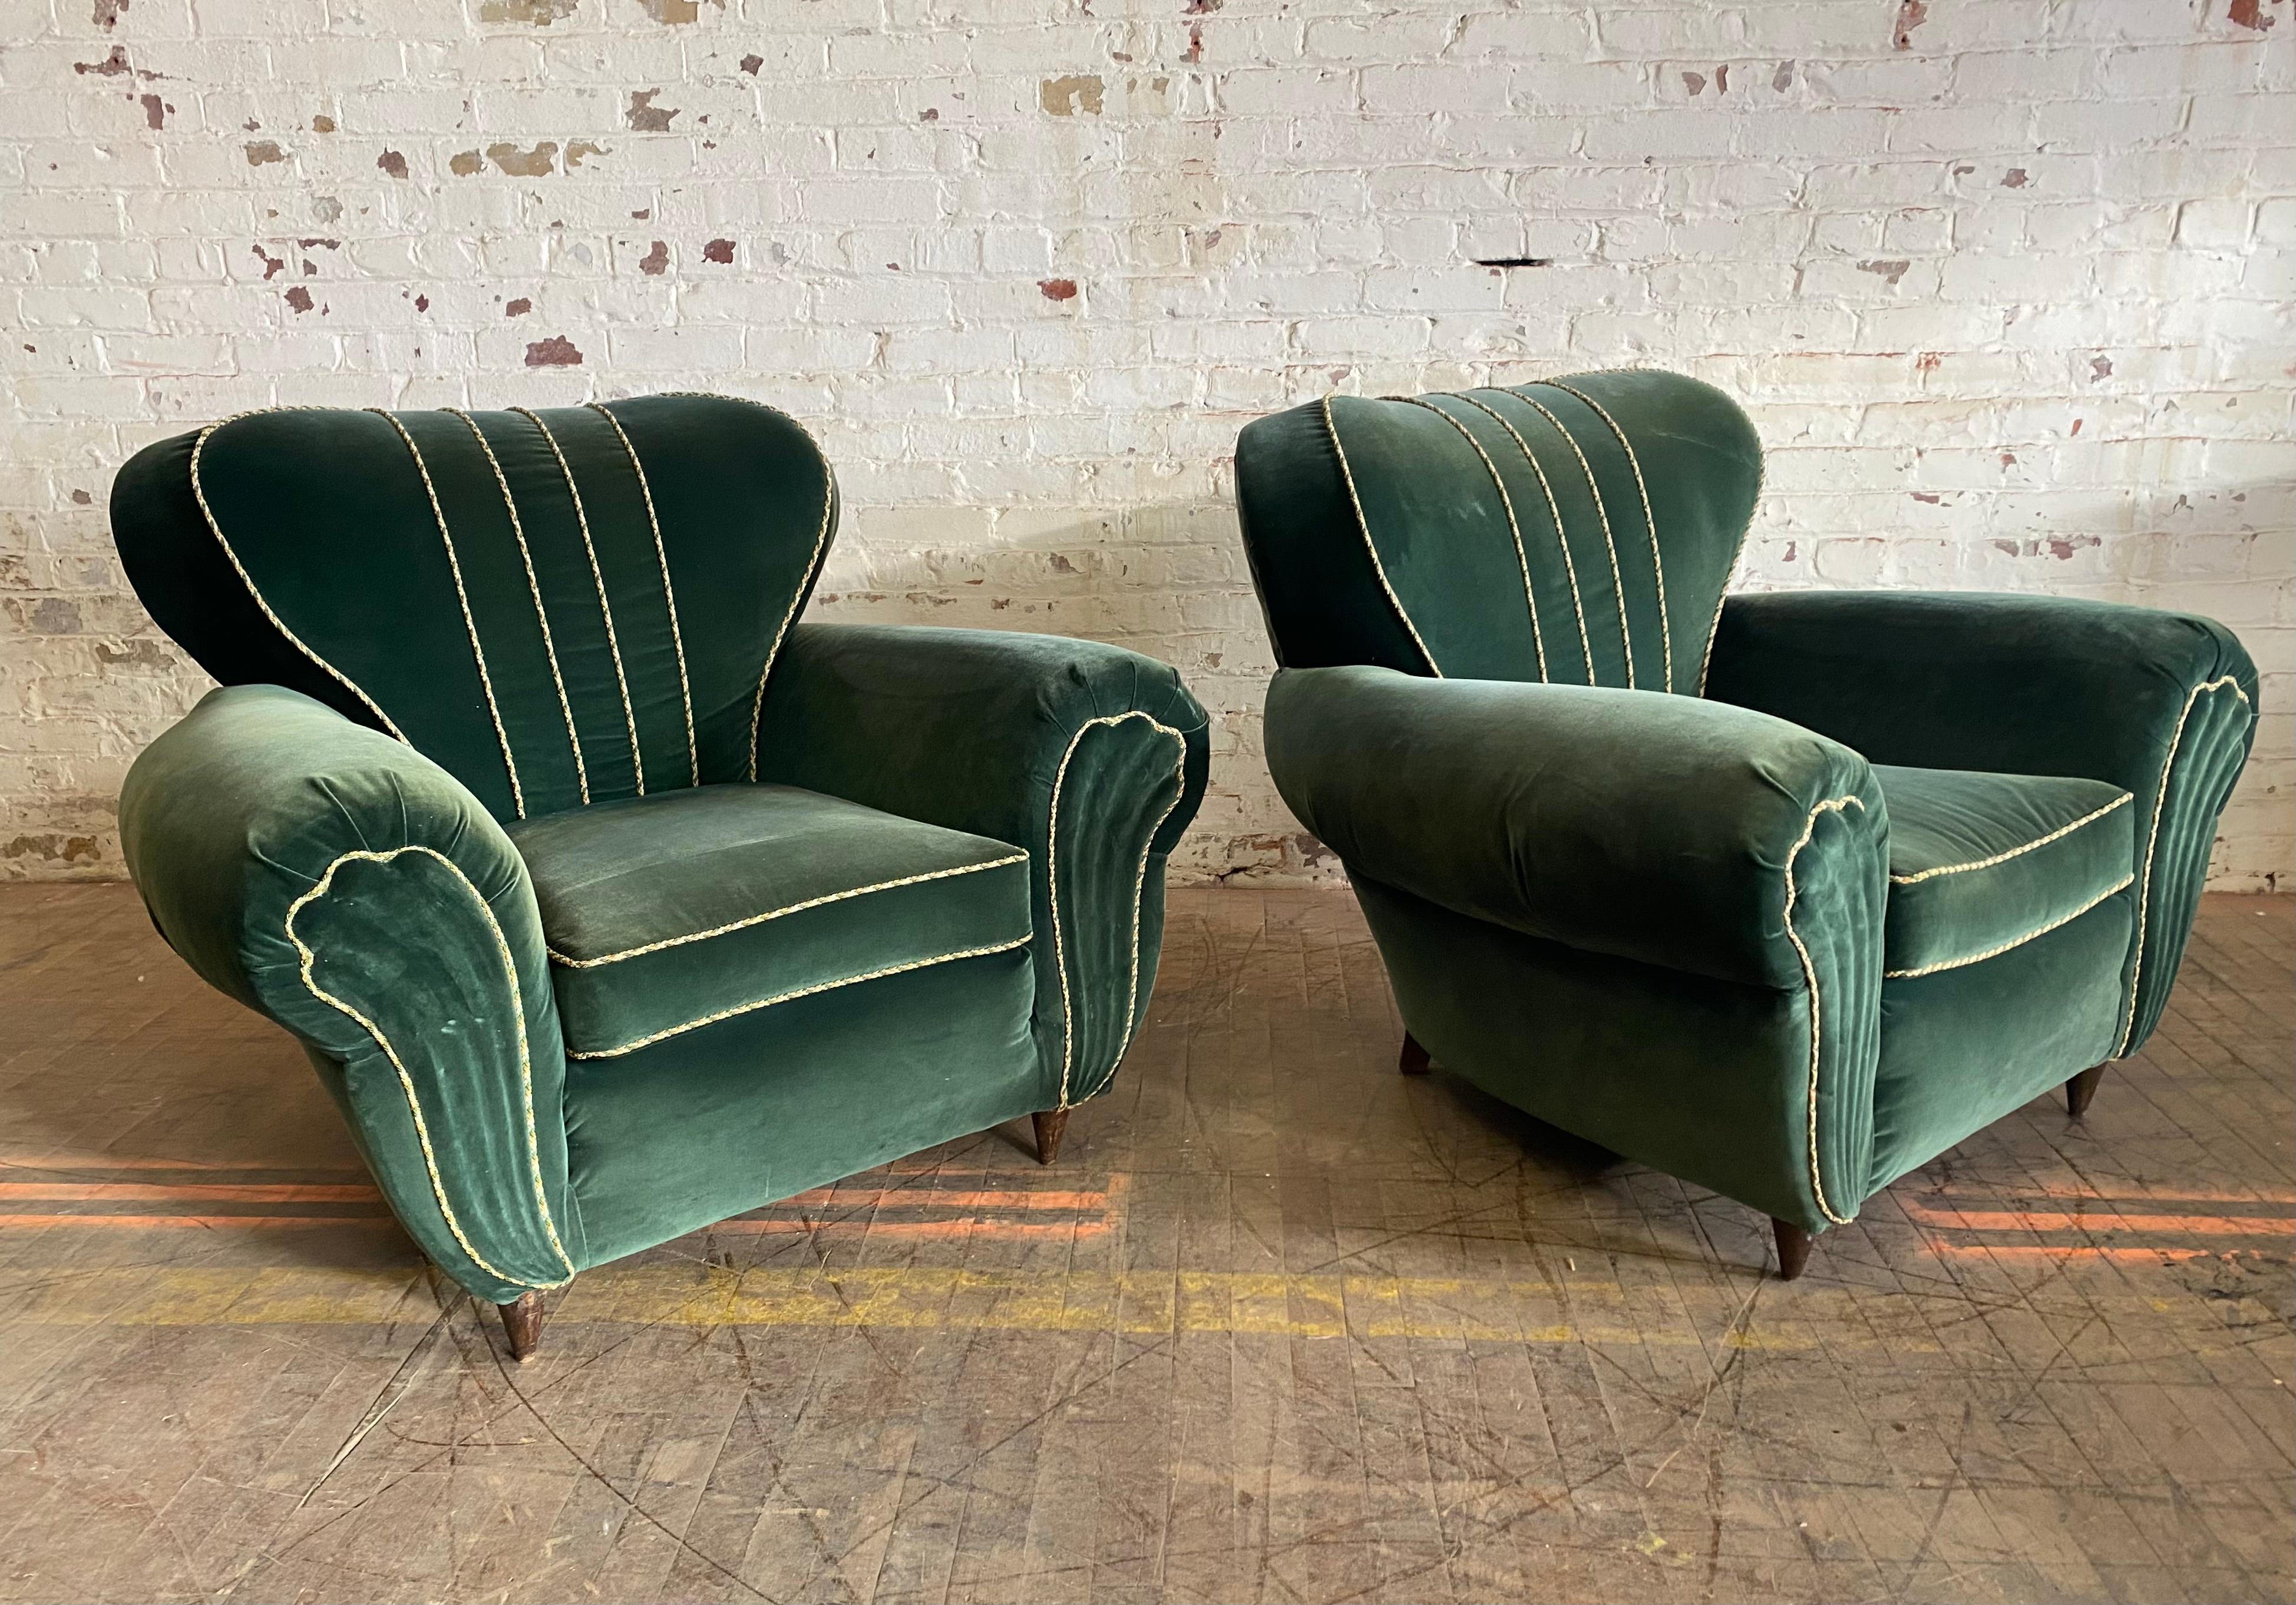 1940s Art Deco Italian Club Chairs, Unusual Form, Oversized by Guglielmo Ulrich For Sale 5